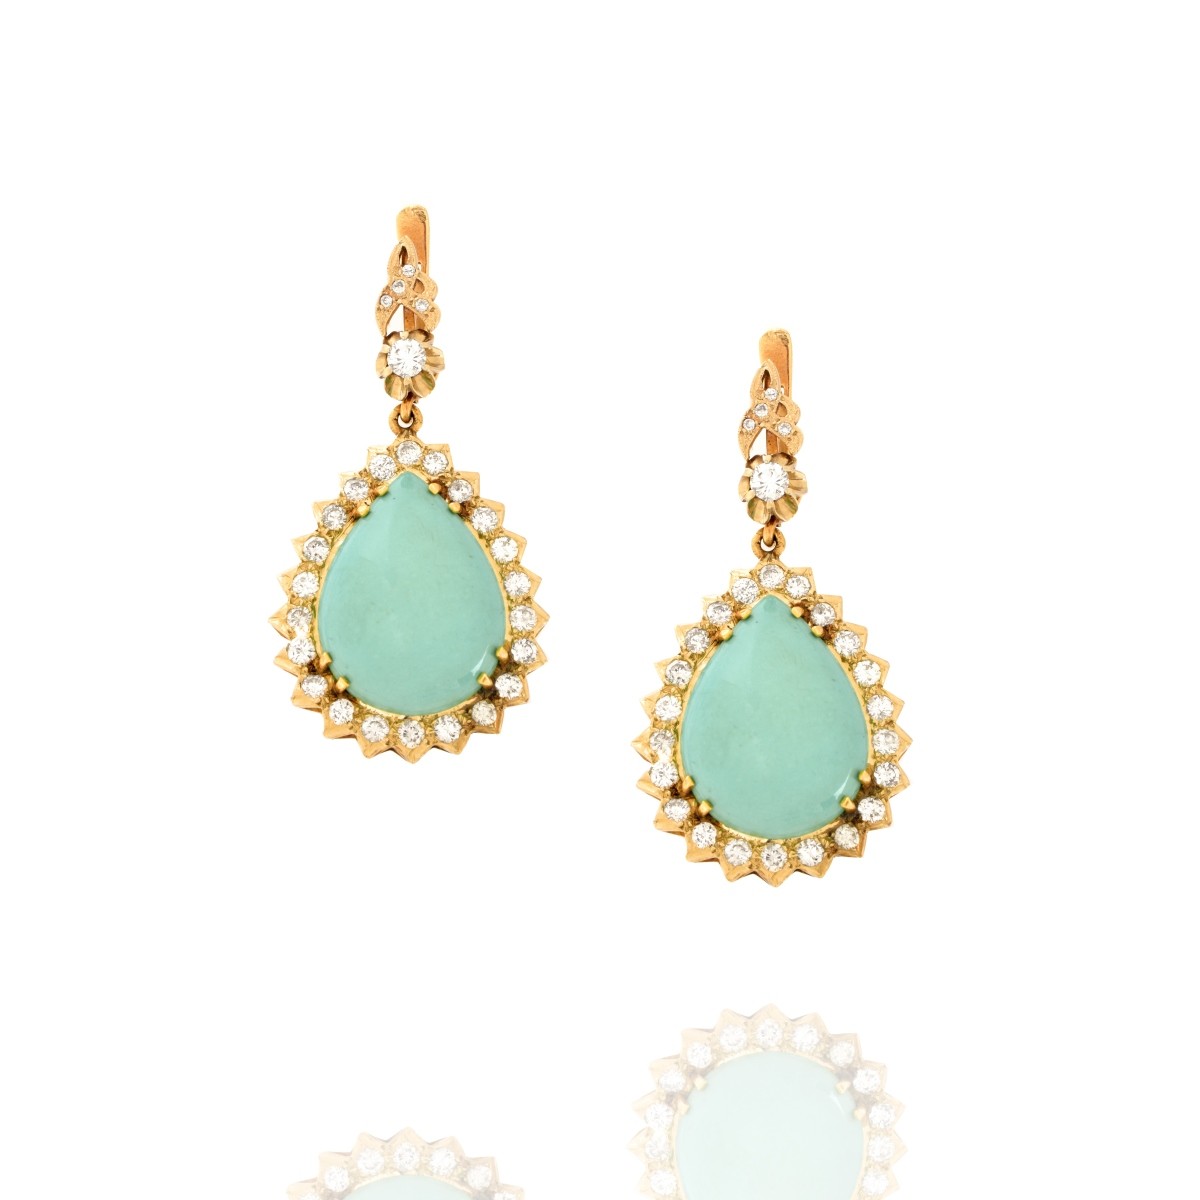 Diamond, Turquoise and 14K Earrings